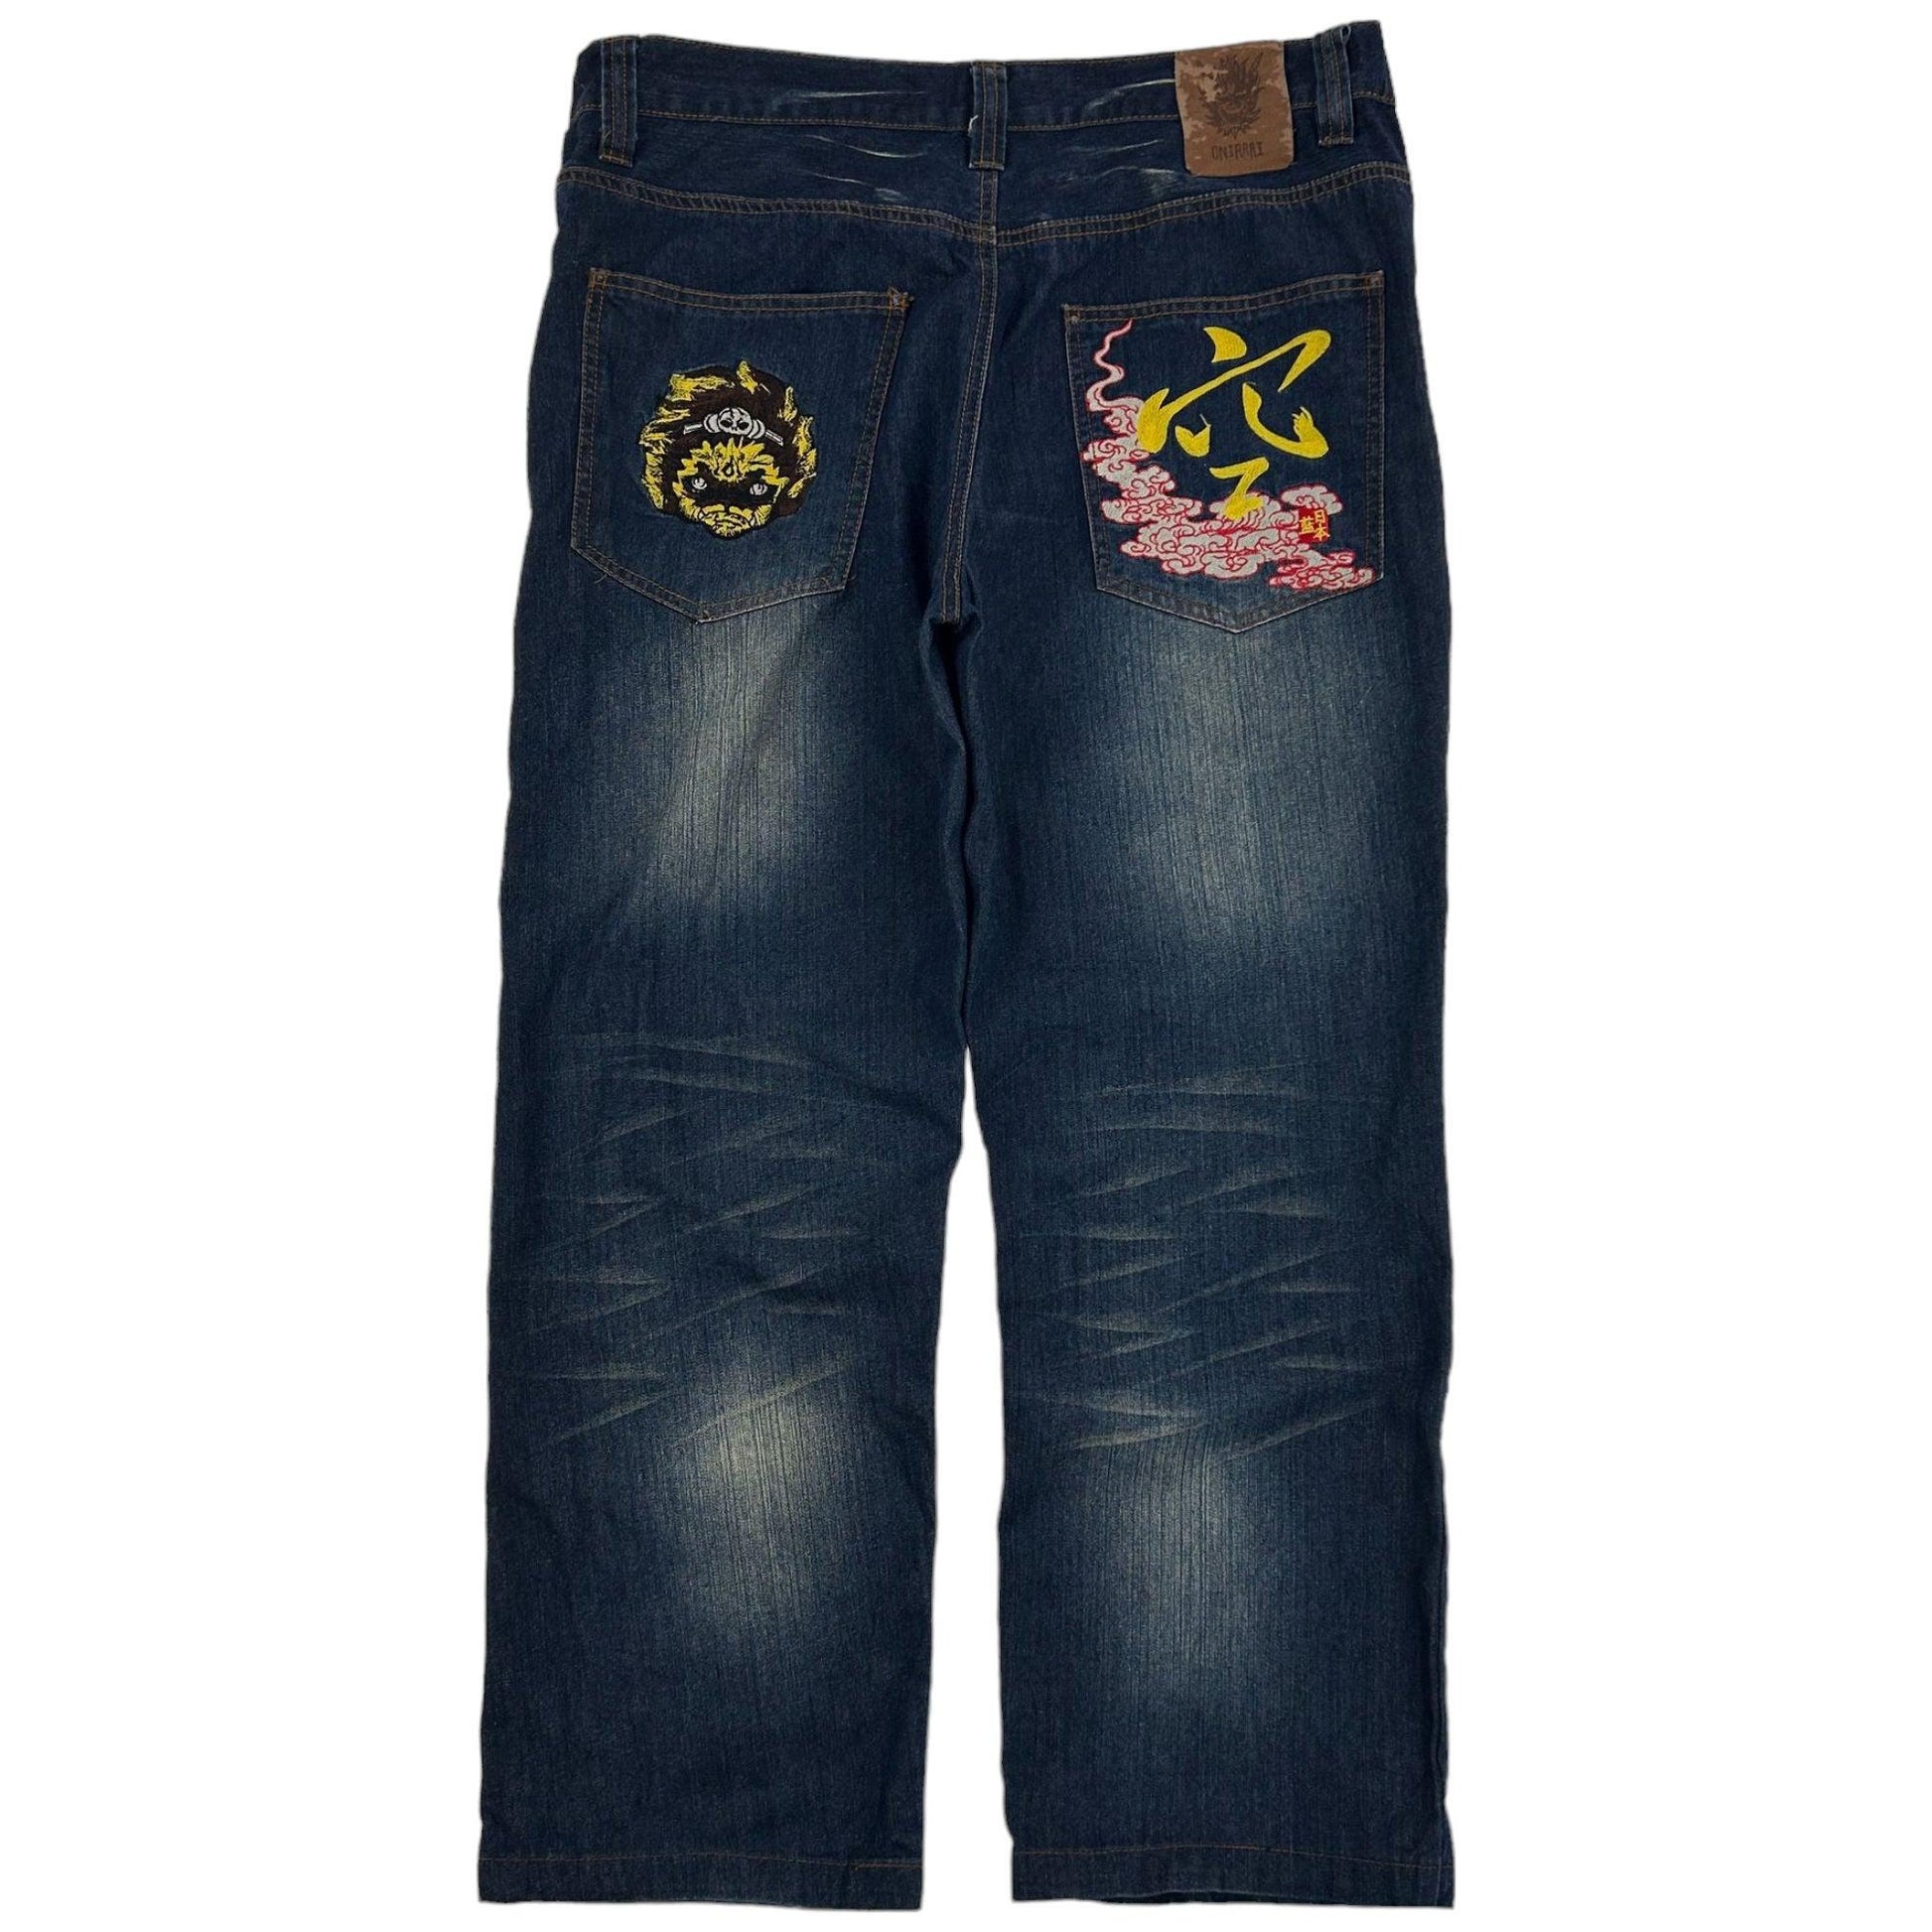 Vintage Oniarai Japanese Denim Jeans Size W32 - Known Source